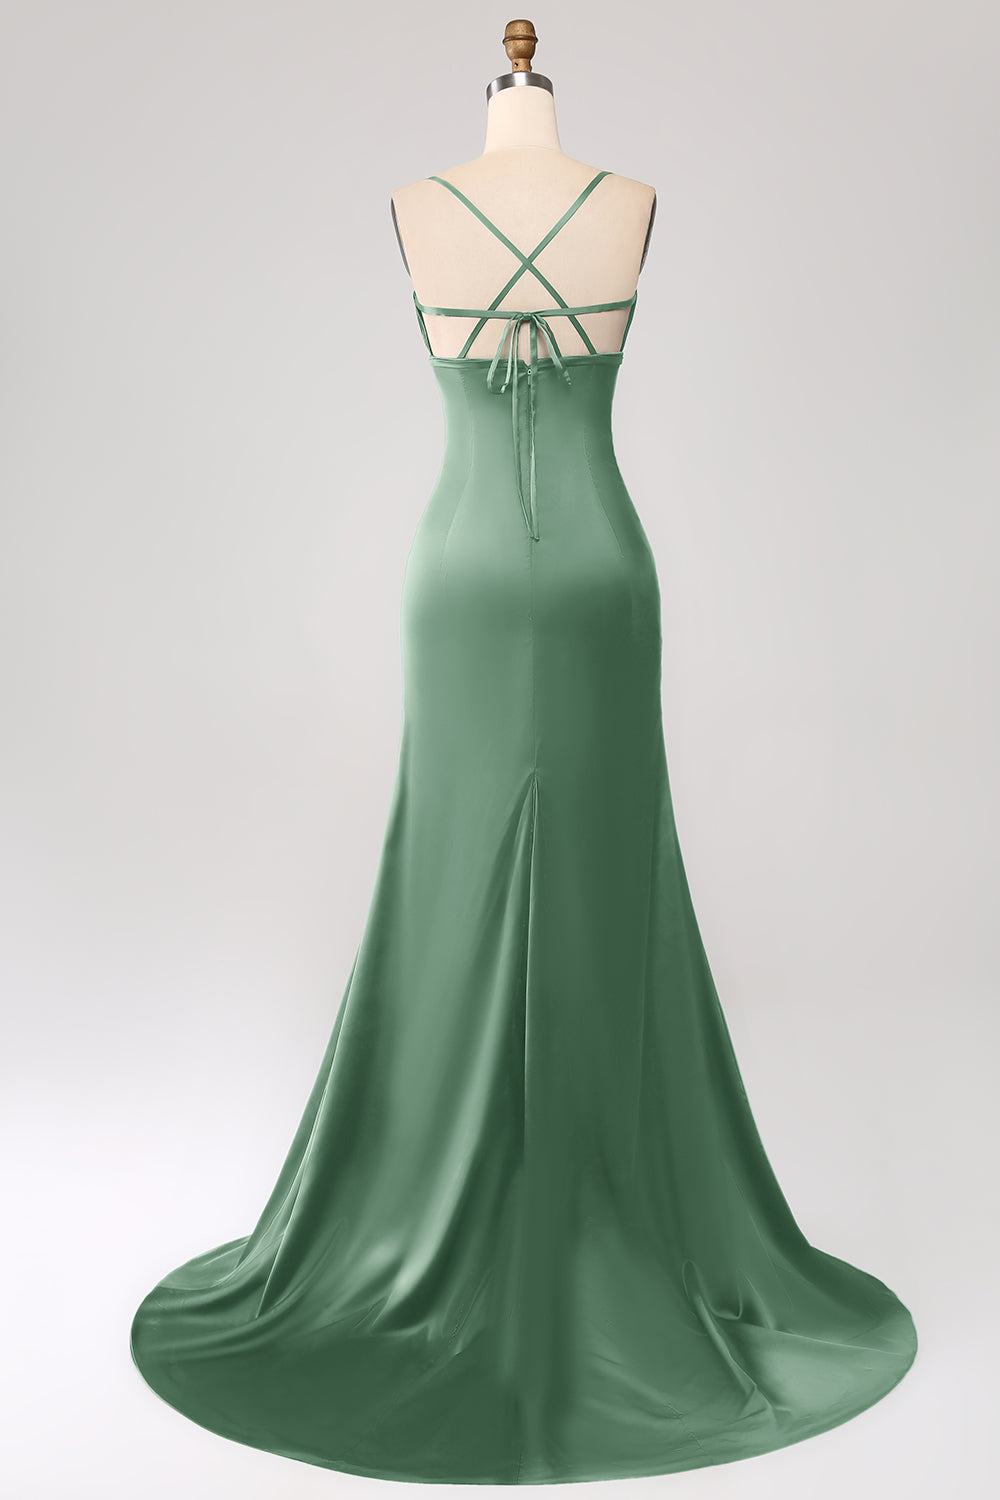 Dark Green Mermaid Spaghetti Straps Satin Prom Dress with Pleated